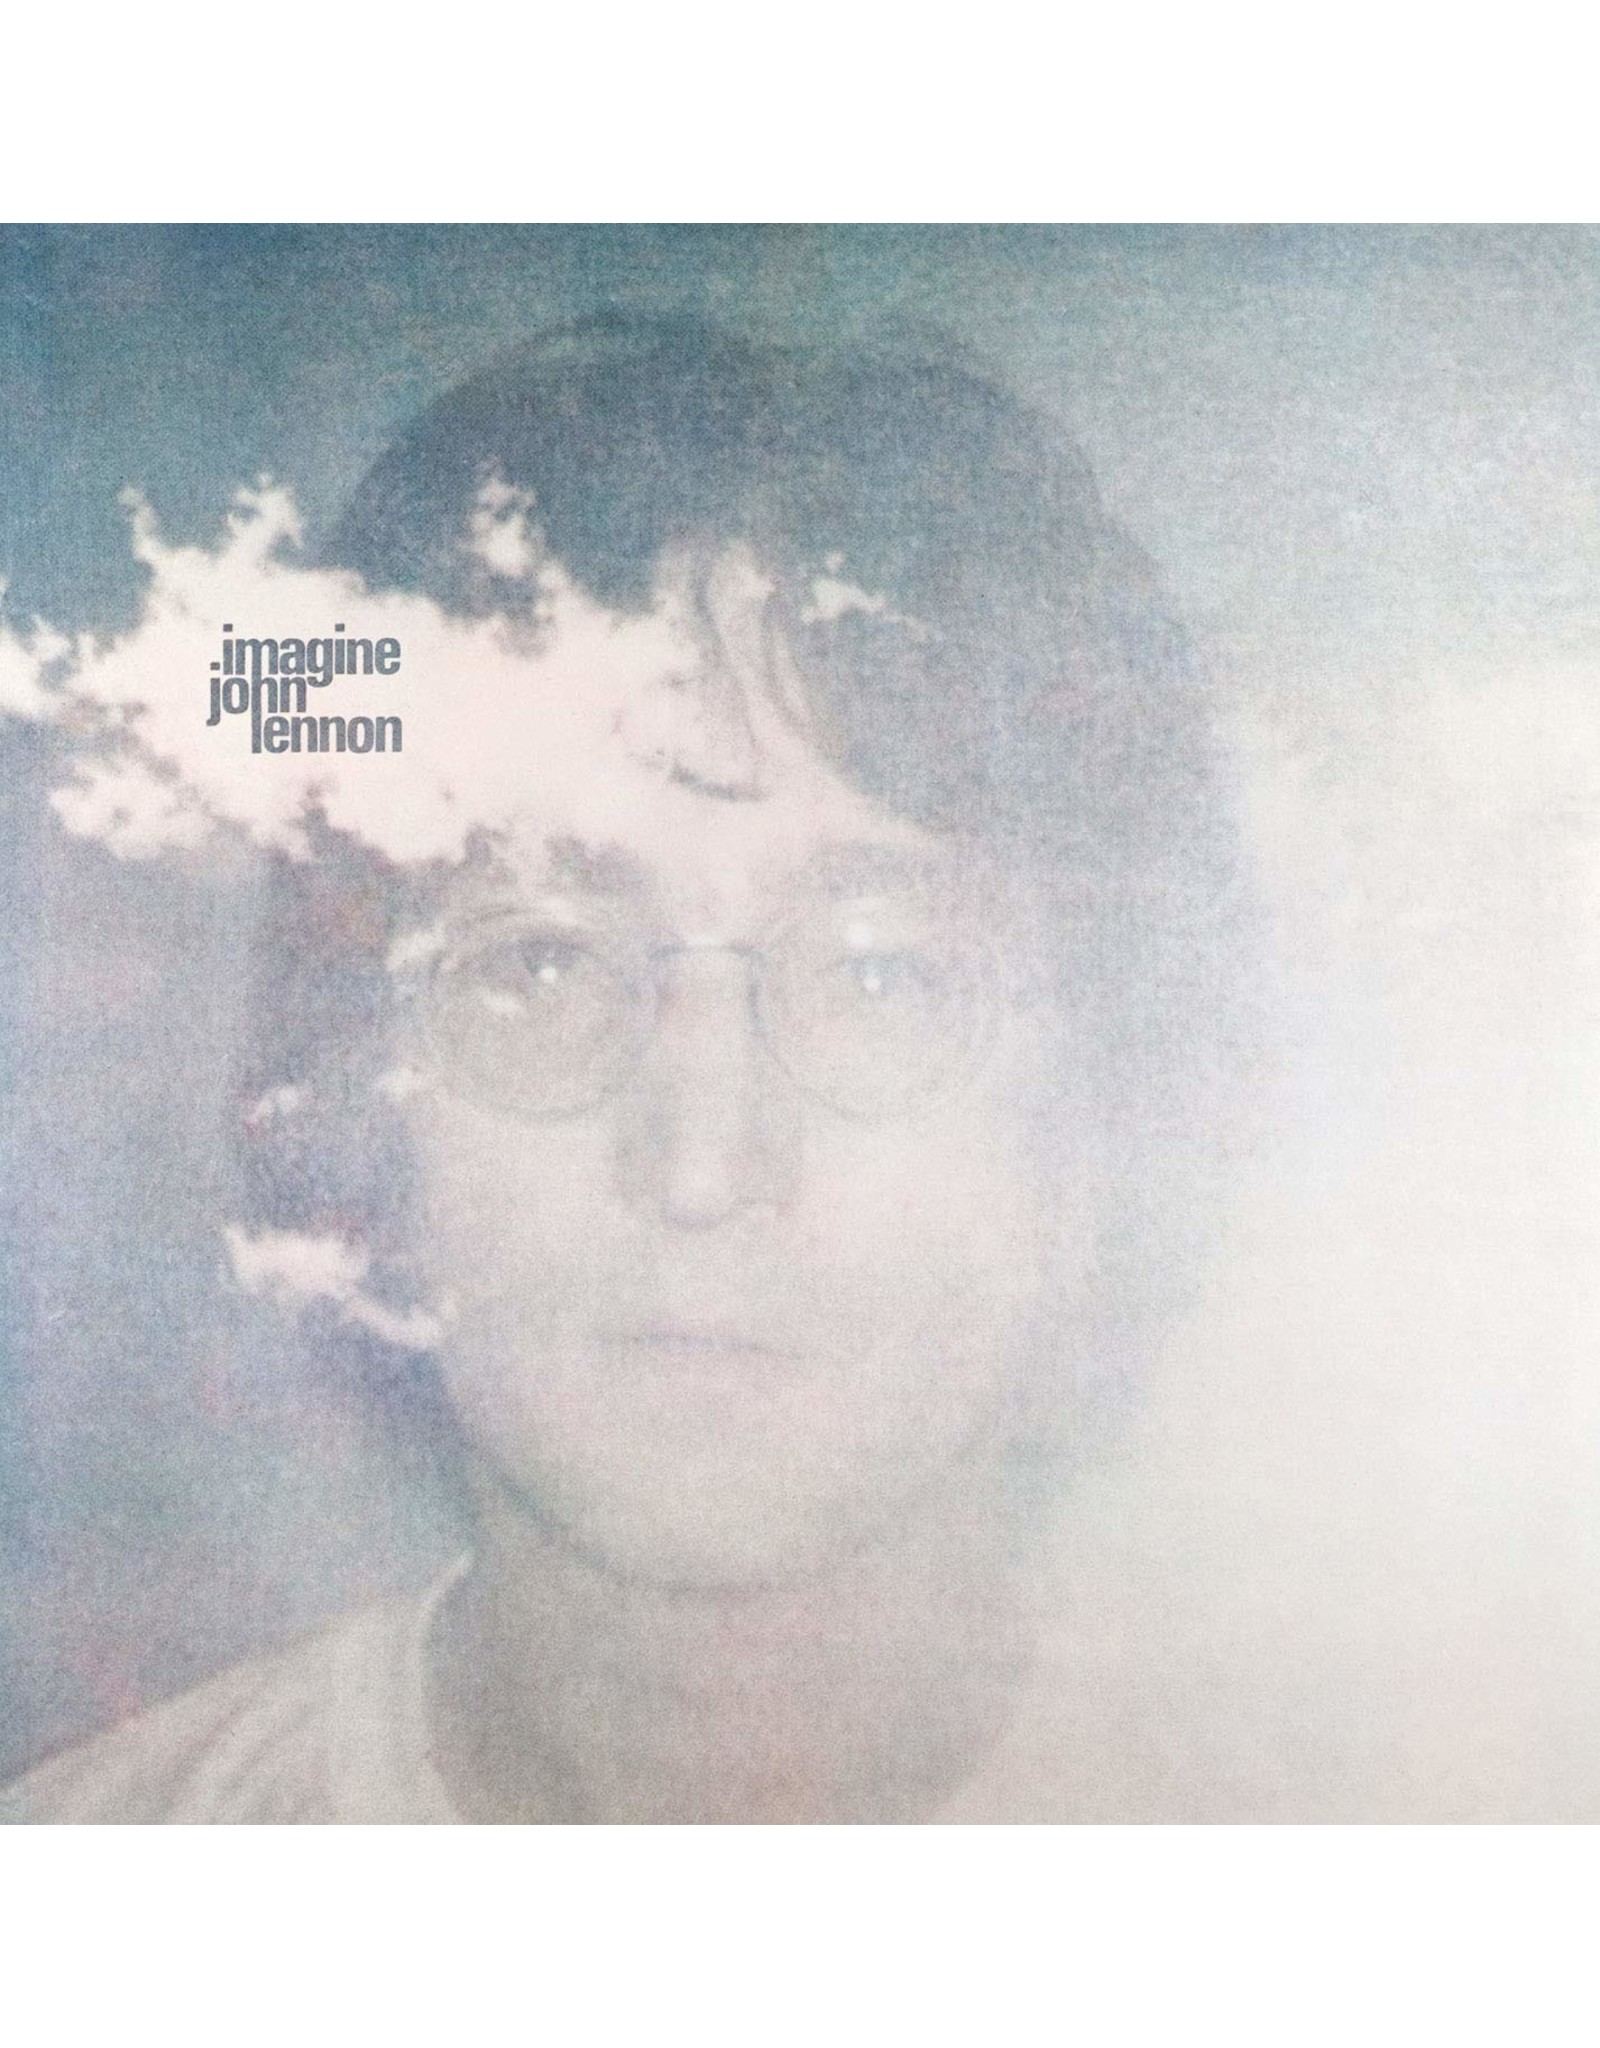 John Lennon - Imagine: The Ultimate Mixes (Deluxe Edition) [White Vinyl]